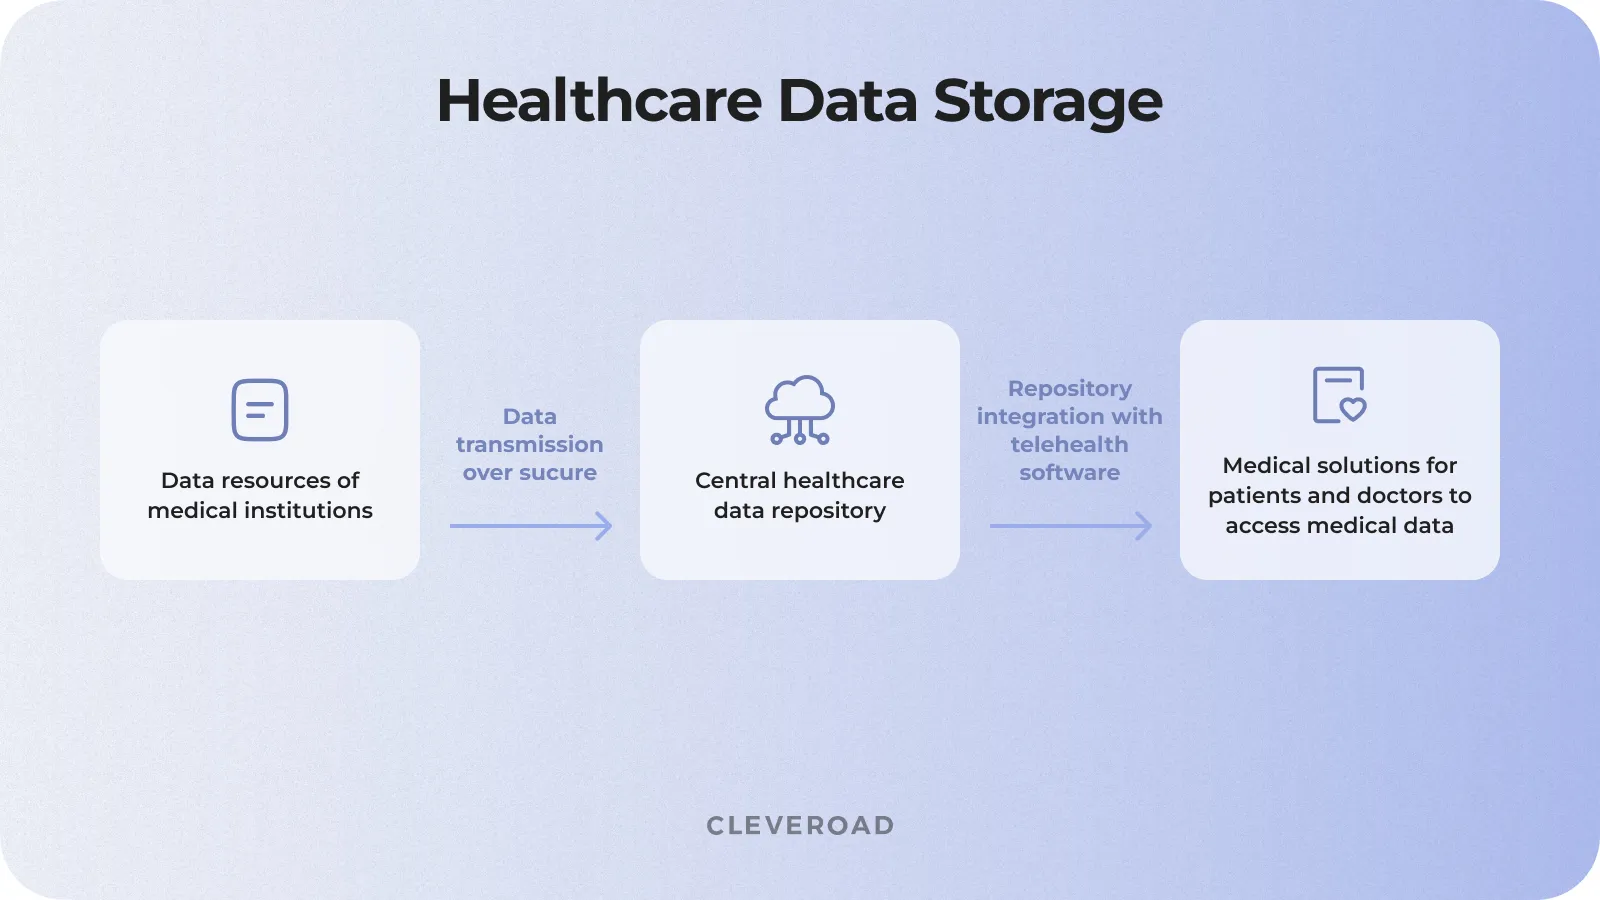 Healthcare data storage operation